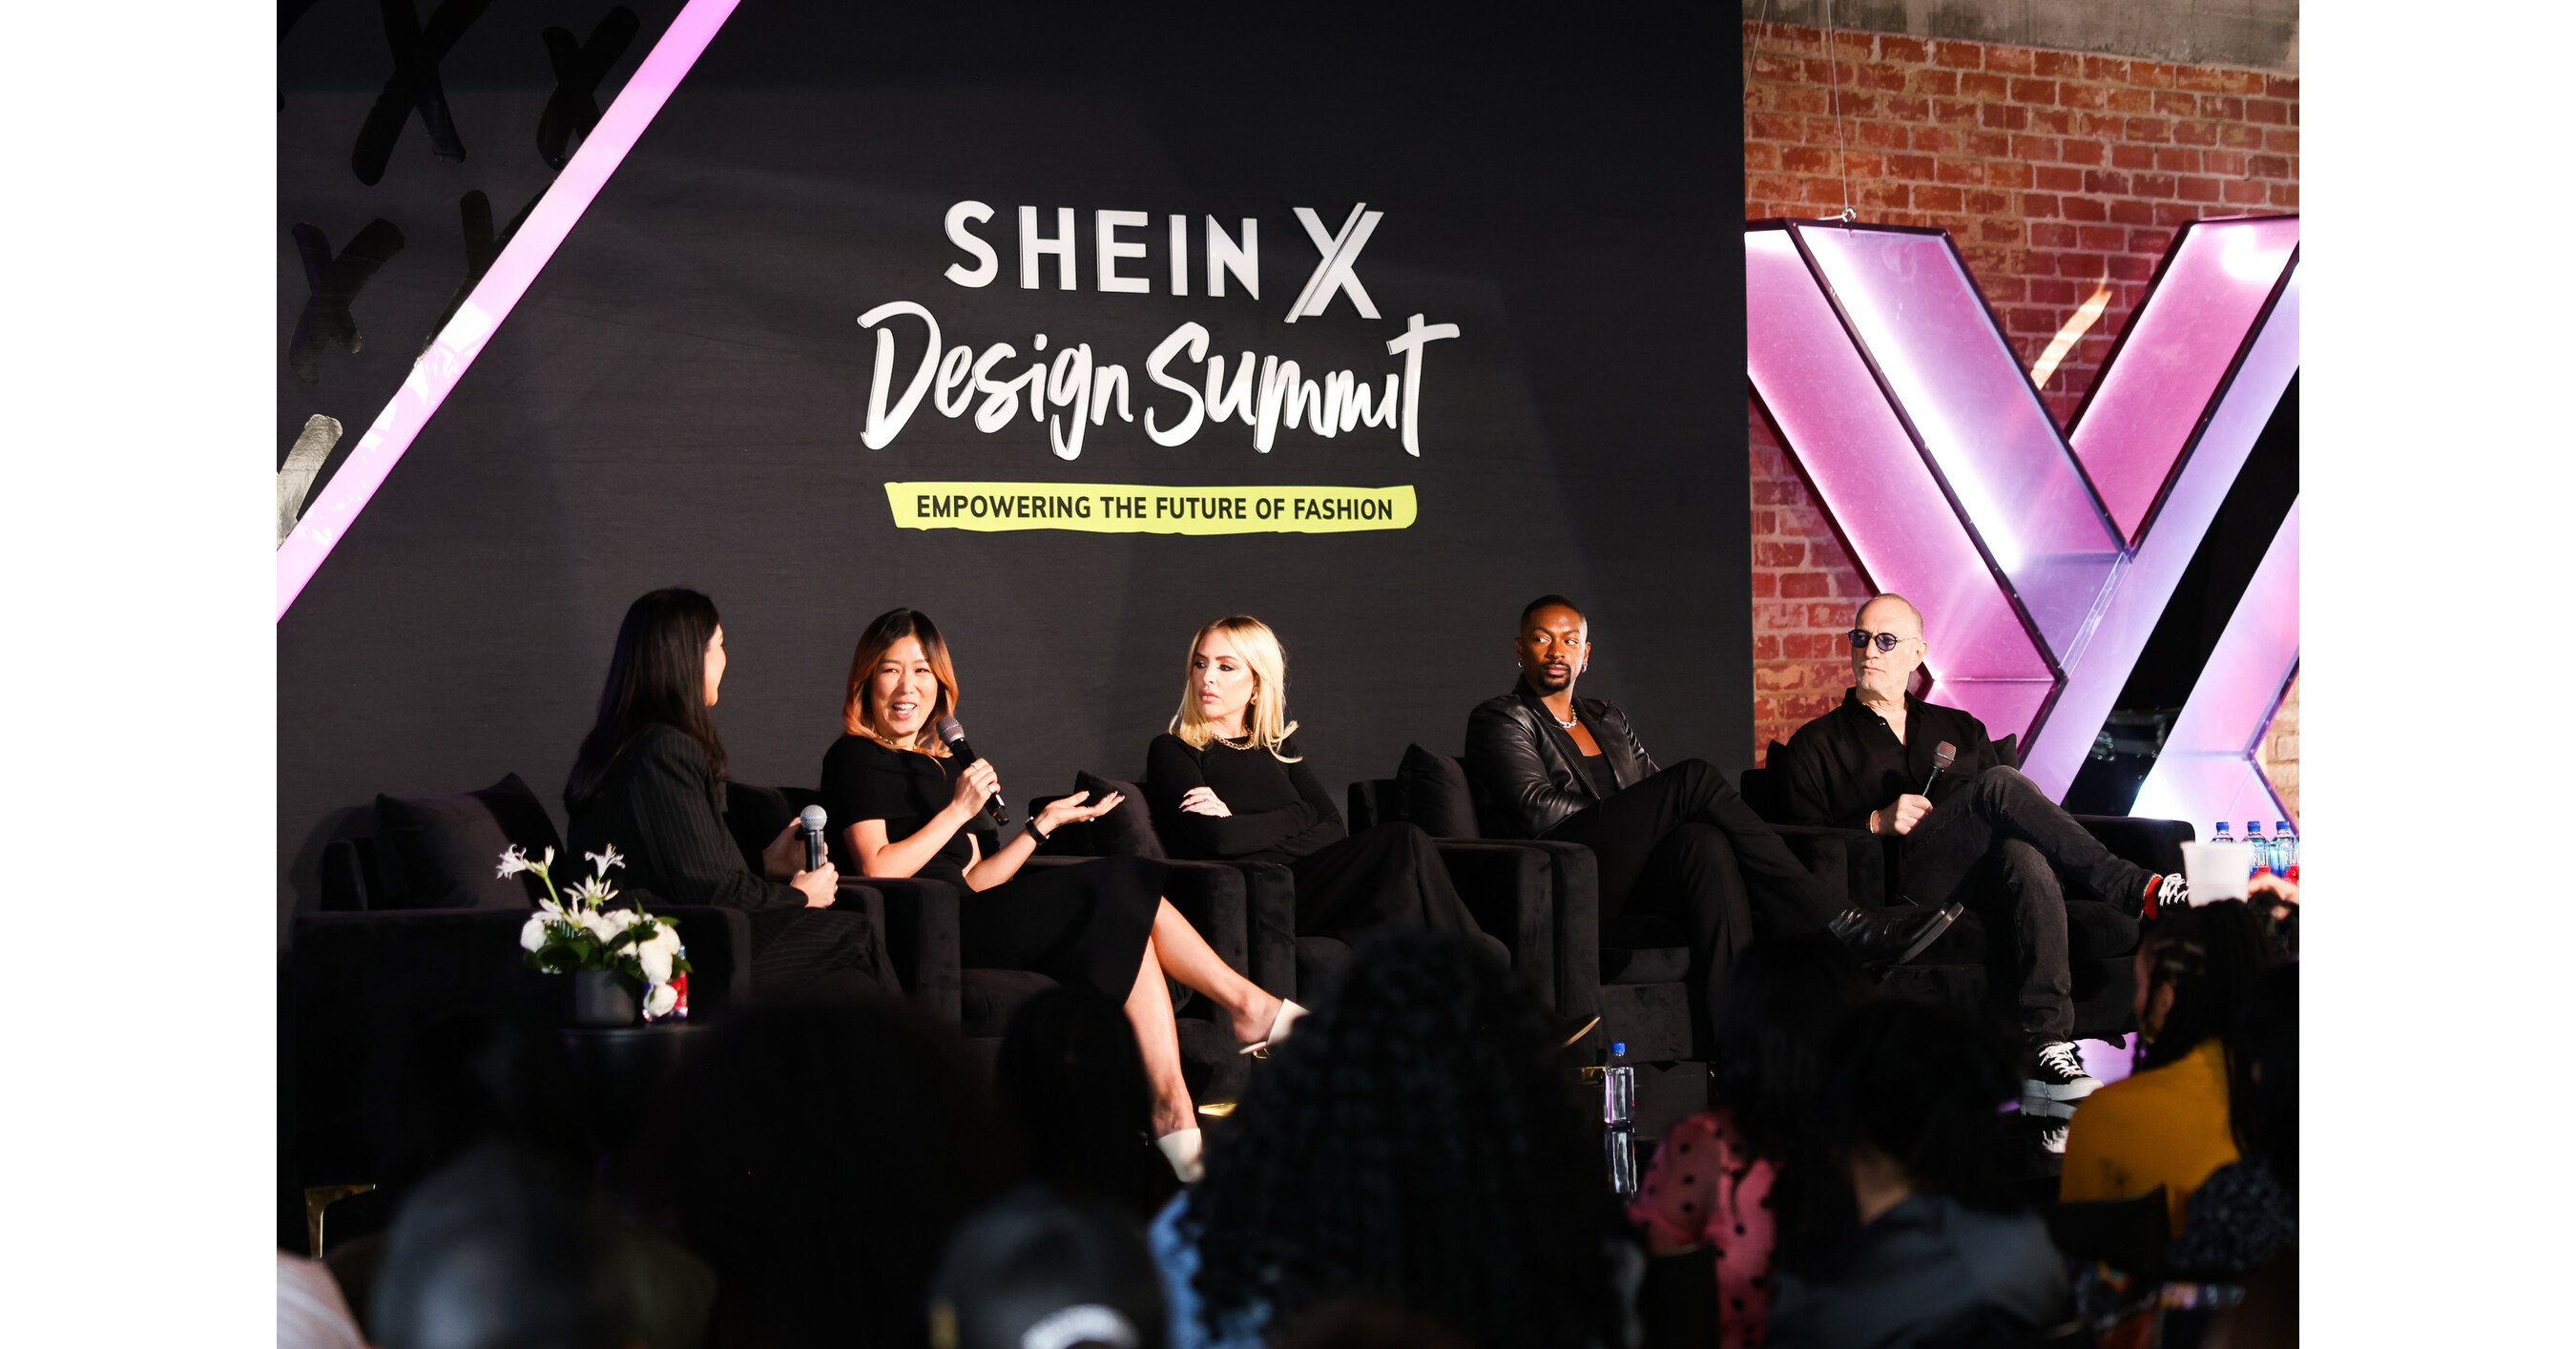 SHEIN X Challenge Goes Global - SHEIN Group